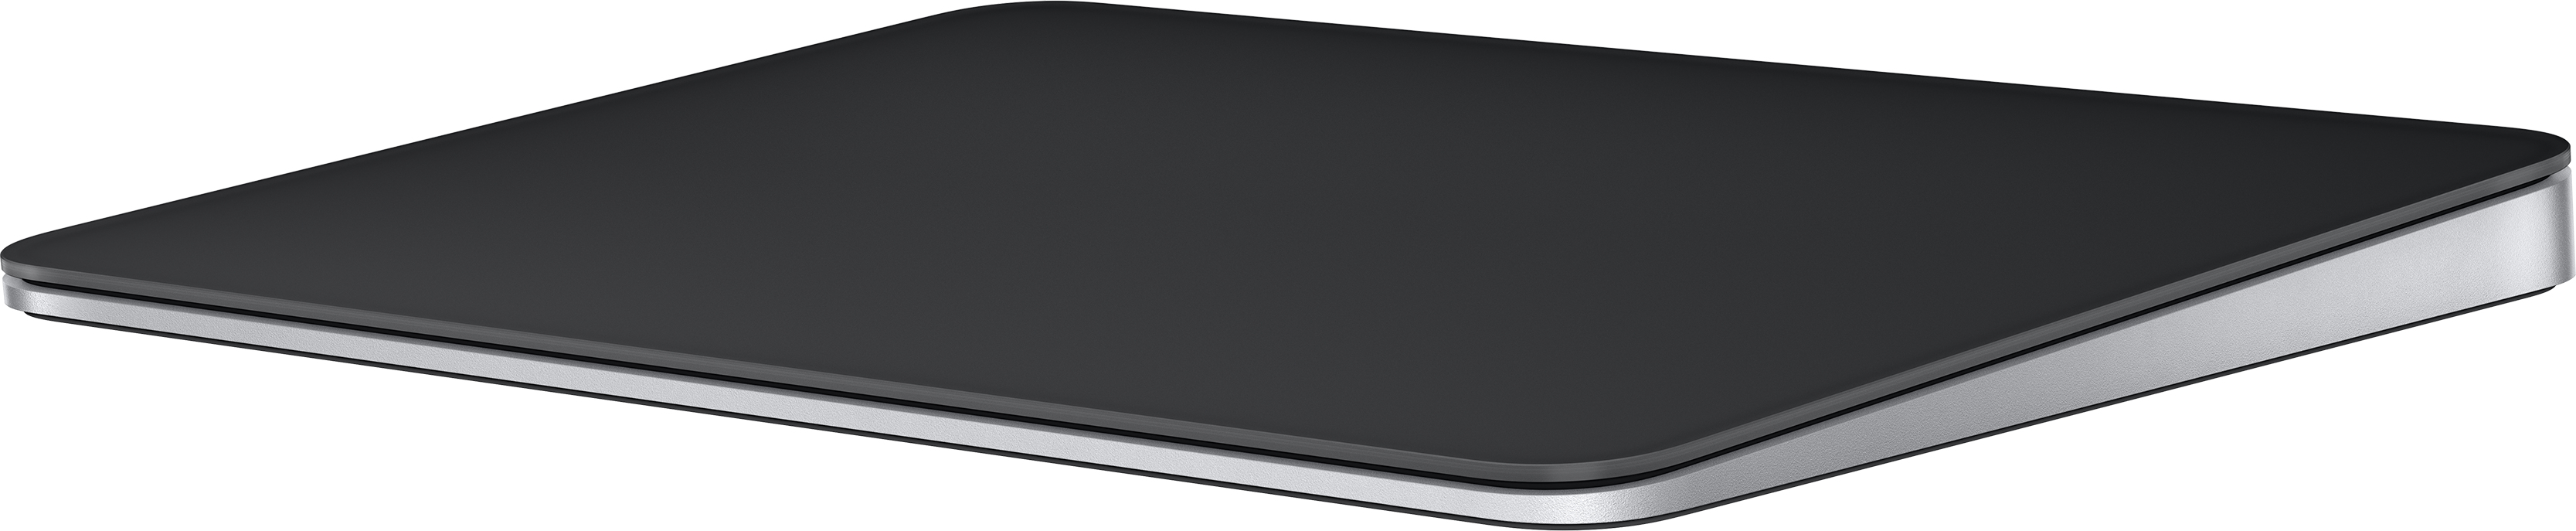 Apple - Cpu Accessories          Magic Trackpad Black                                                    Mmmp3z/a